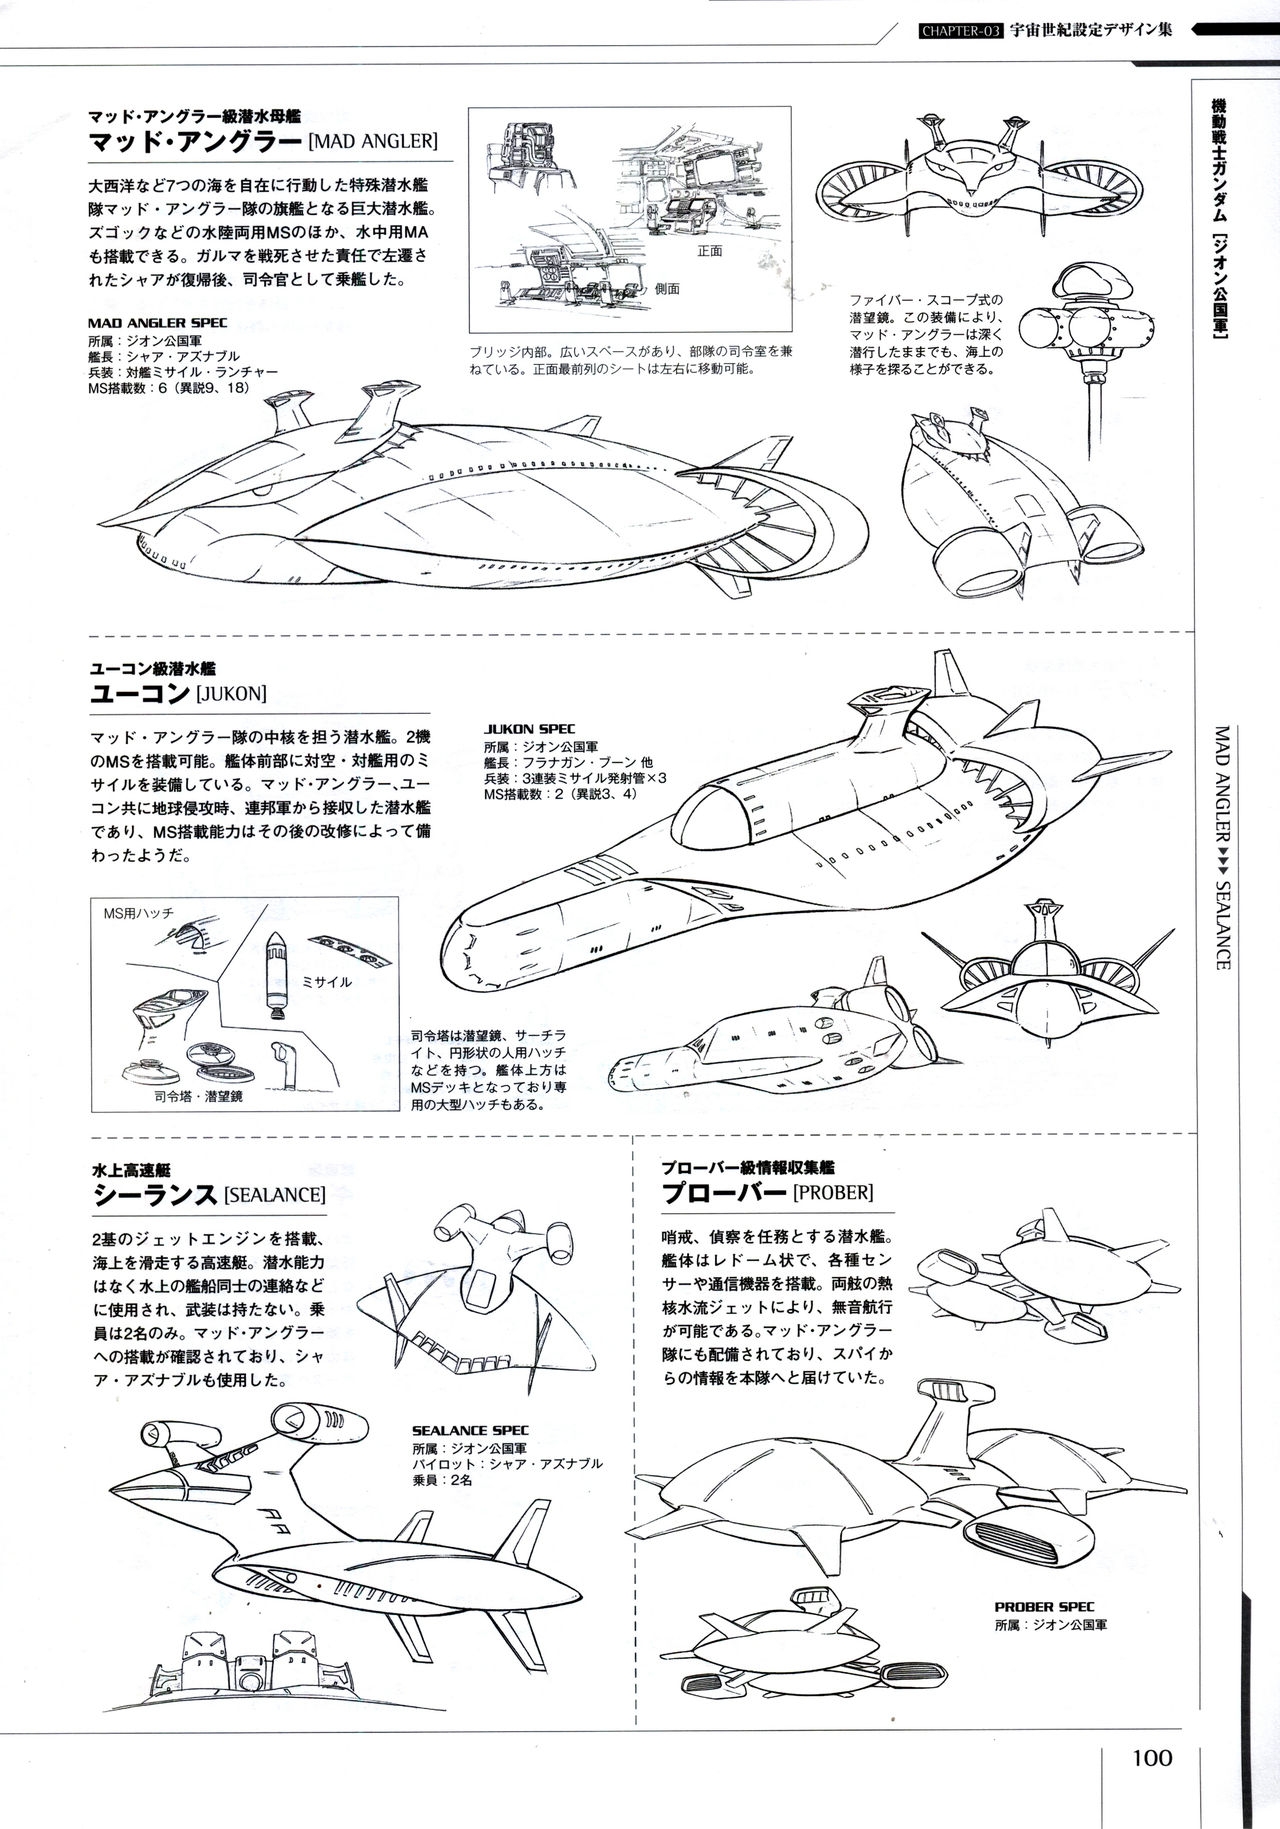 Mobile Suit Gundam - Ship & Aerospace Plane Encyclopedia - Revised Edition 105